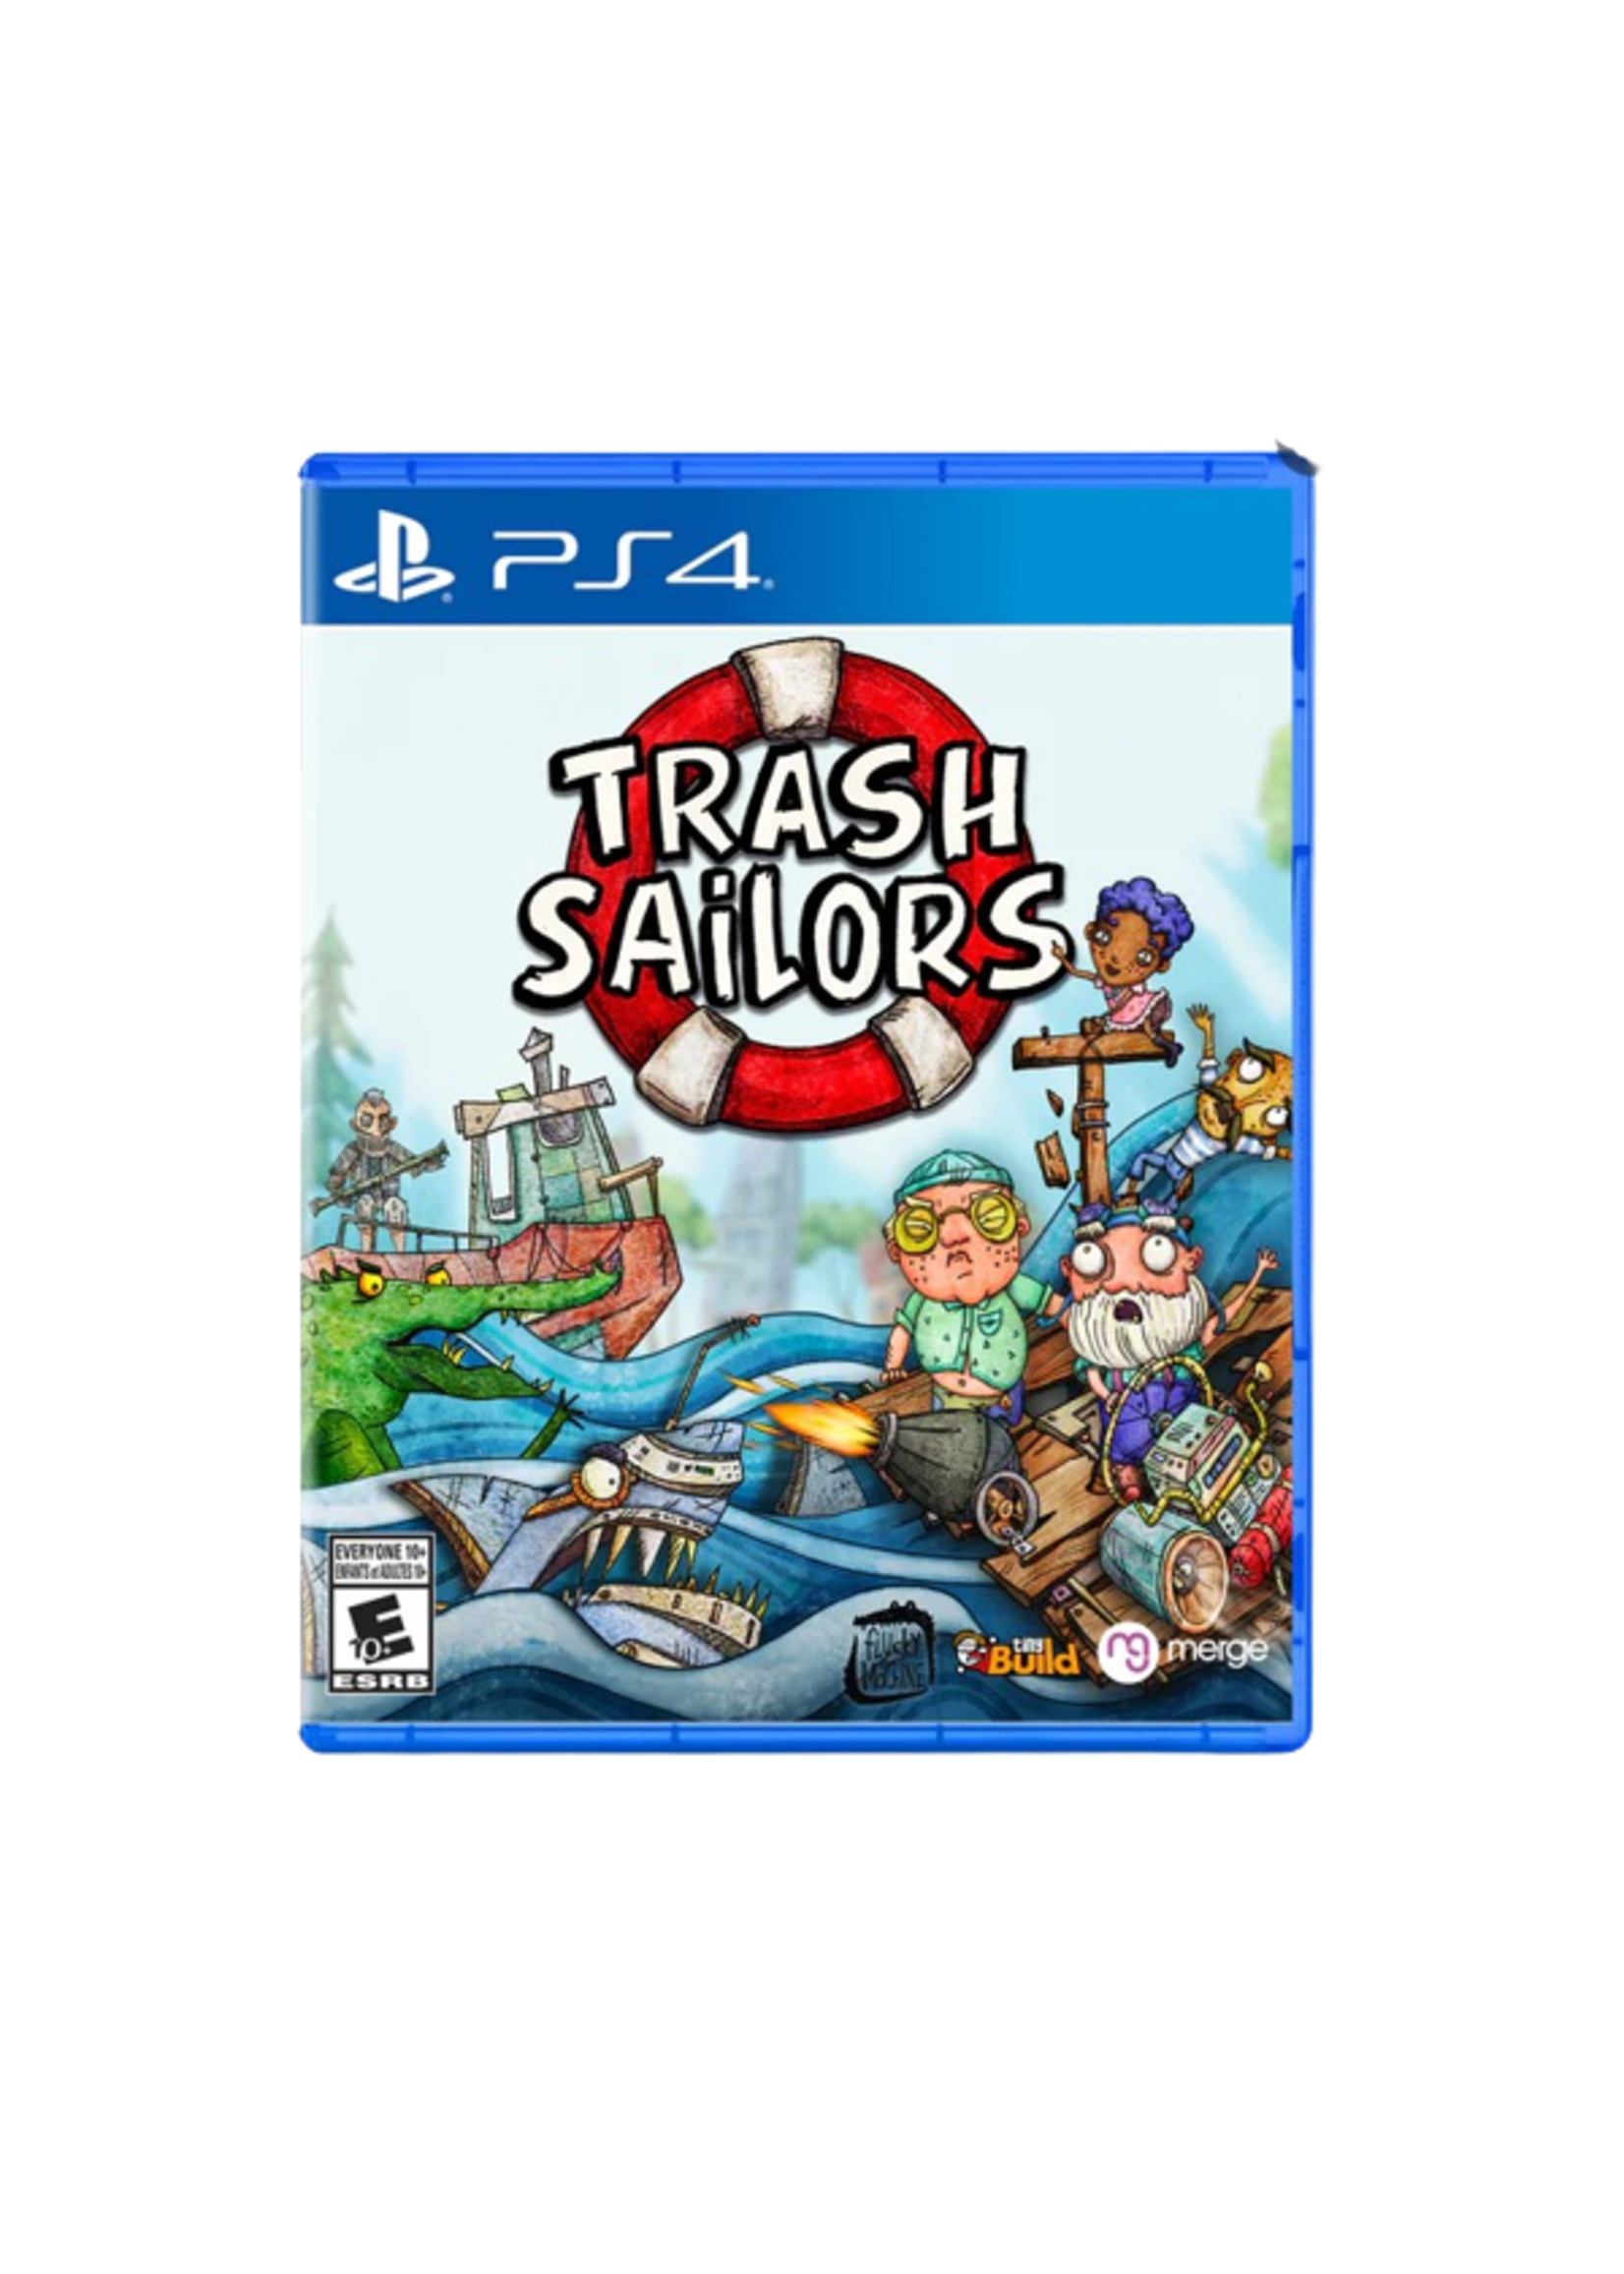 TRASH SAILORS PS4